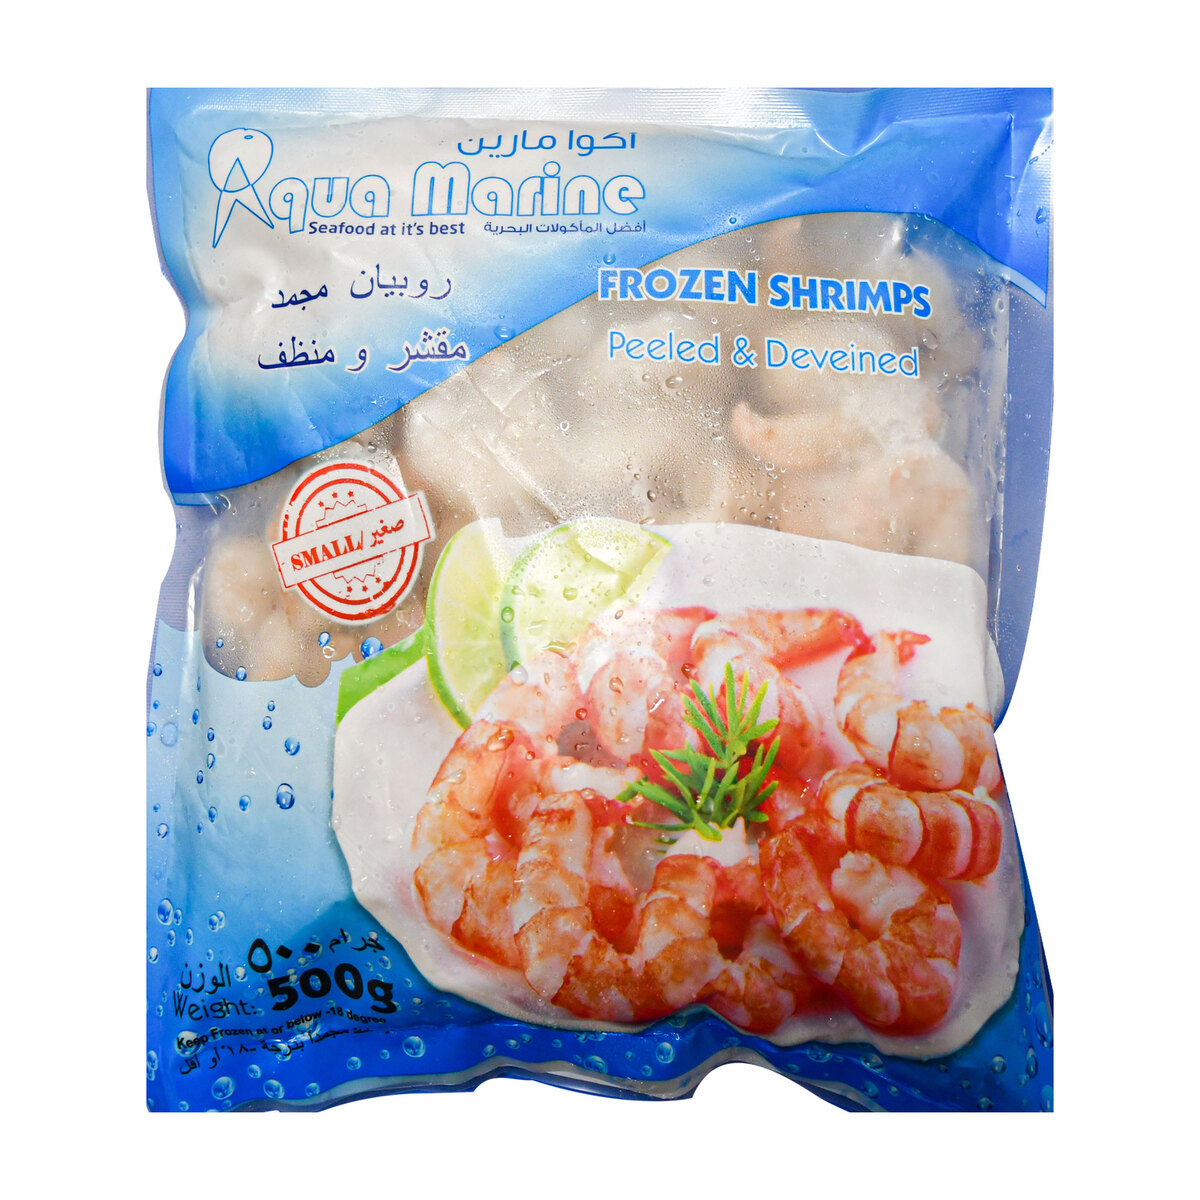 Aqua Marine Frozen Shrimps Peeled & Deveined Small 500g